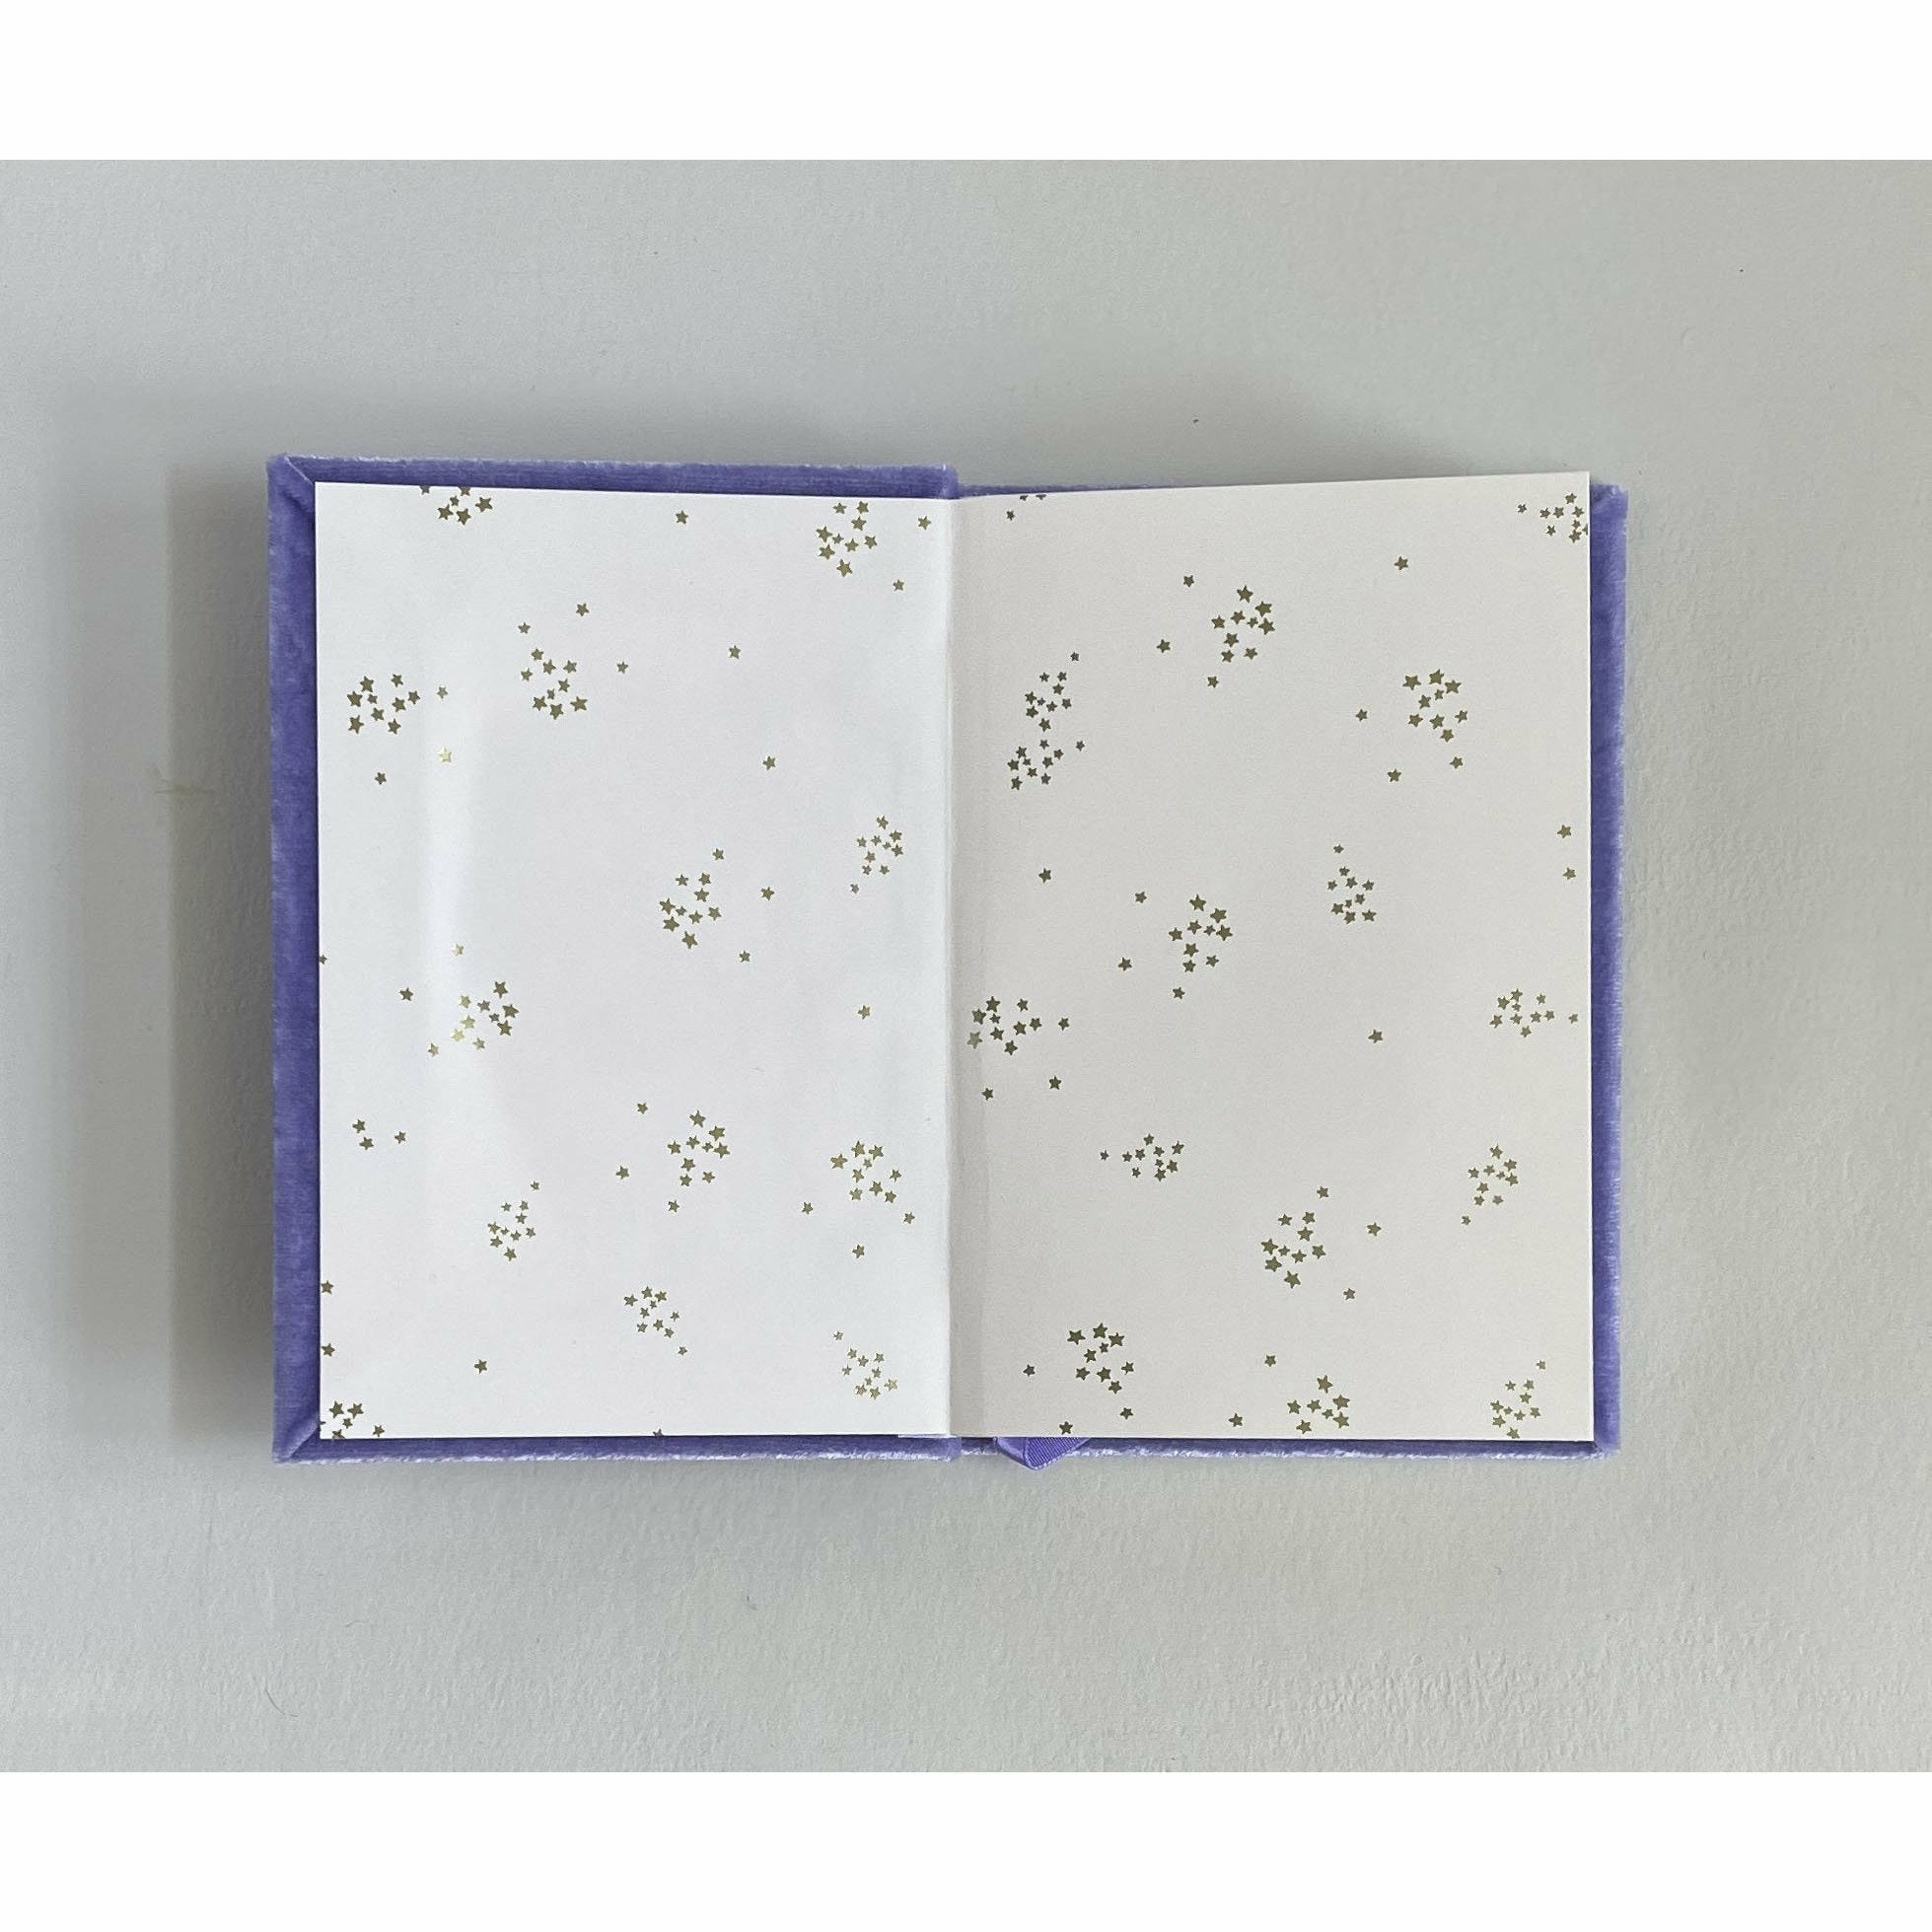 A - The Petite Silk Velvet Book - The First Snow